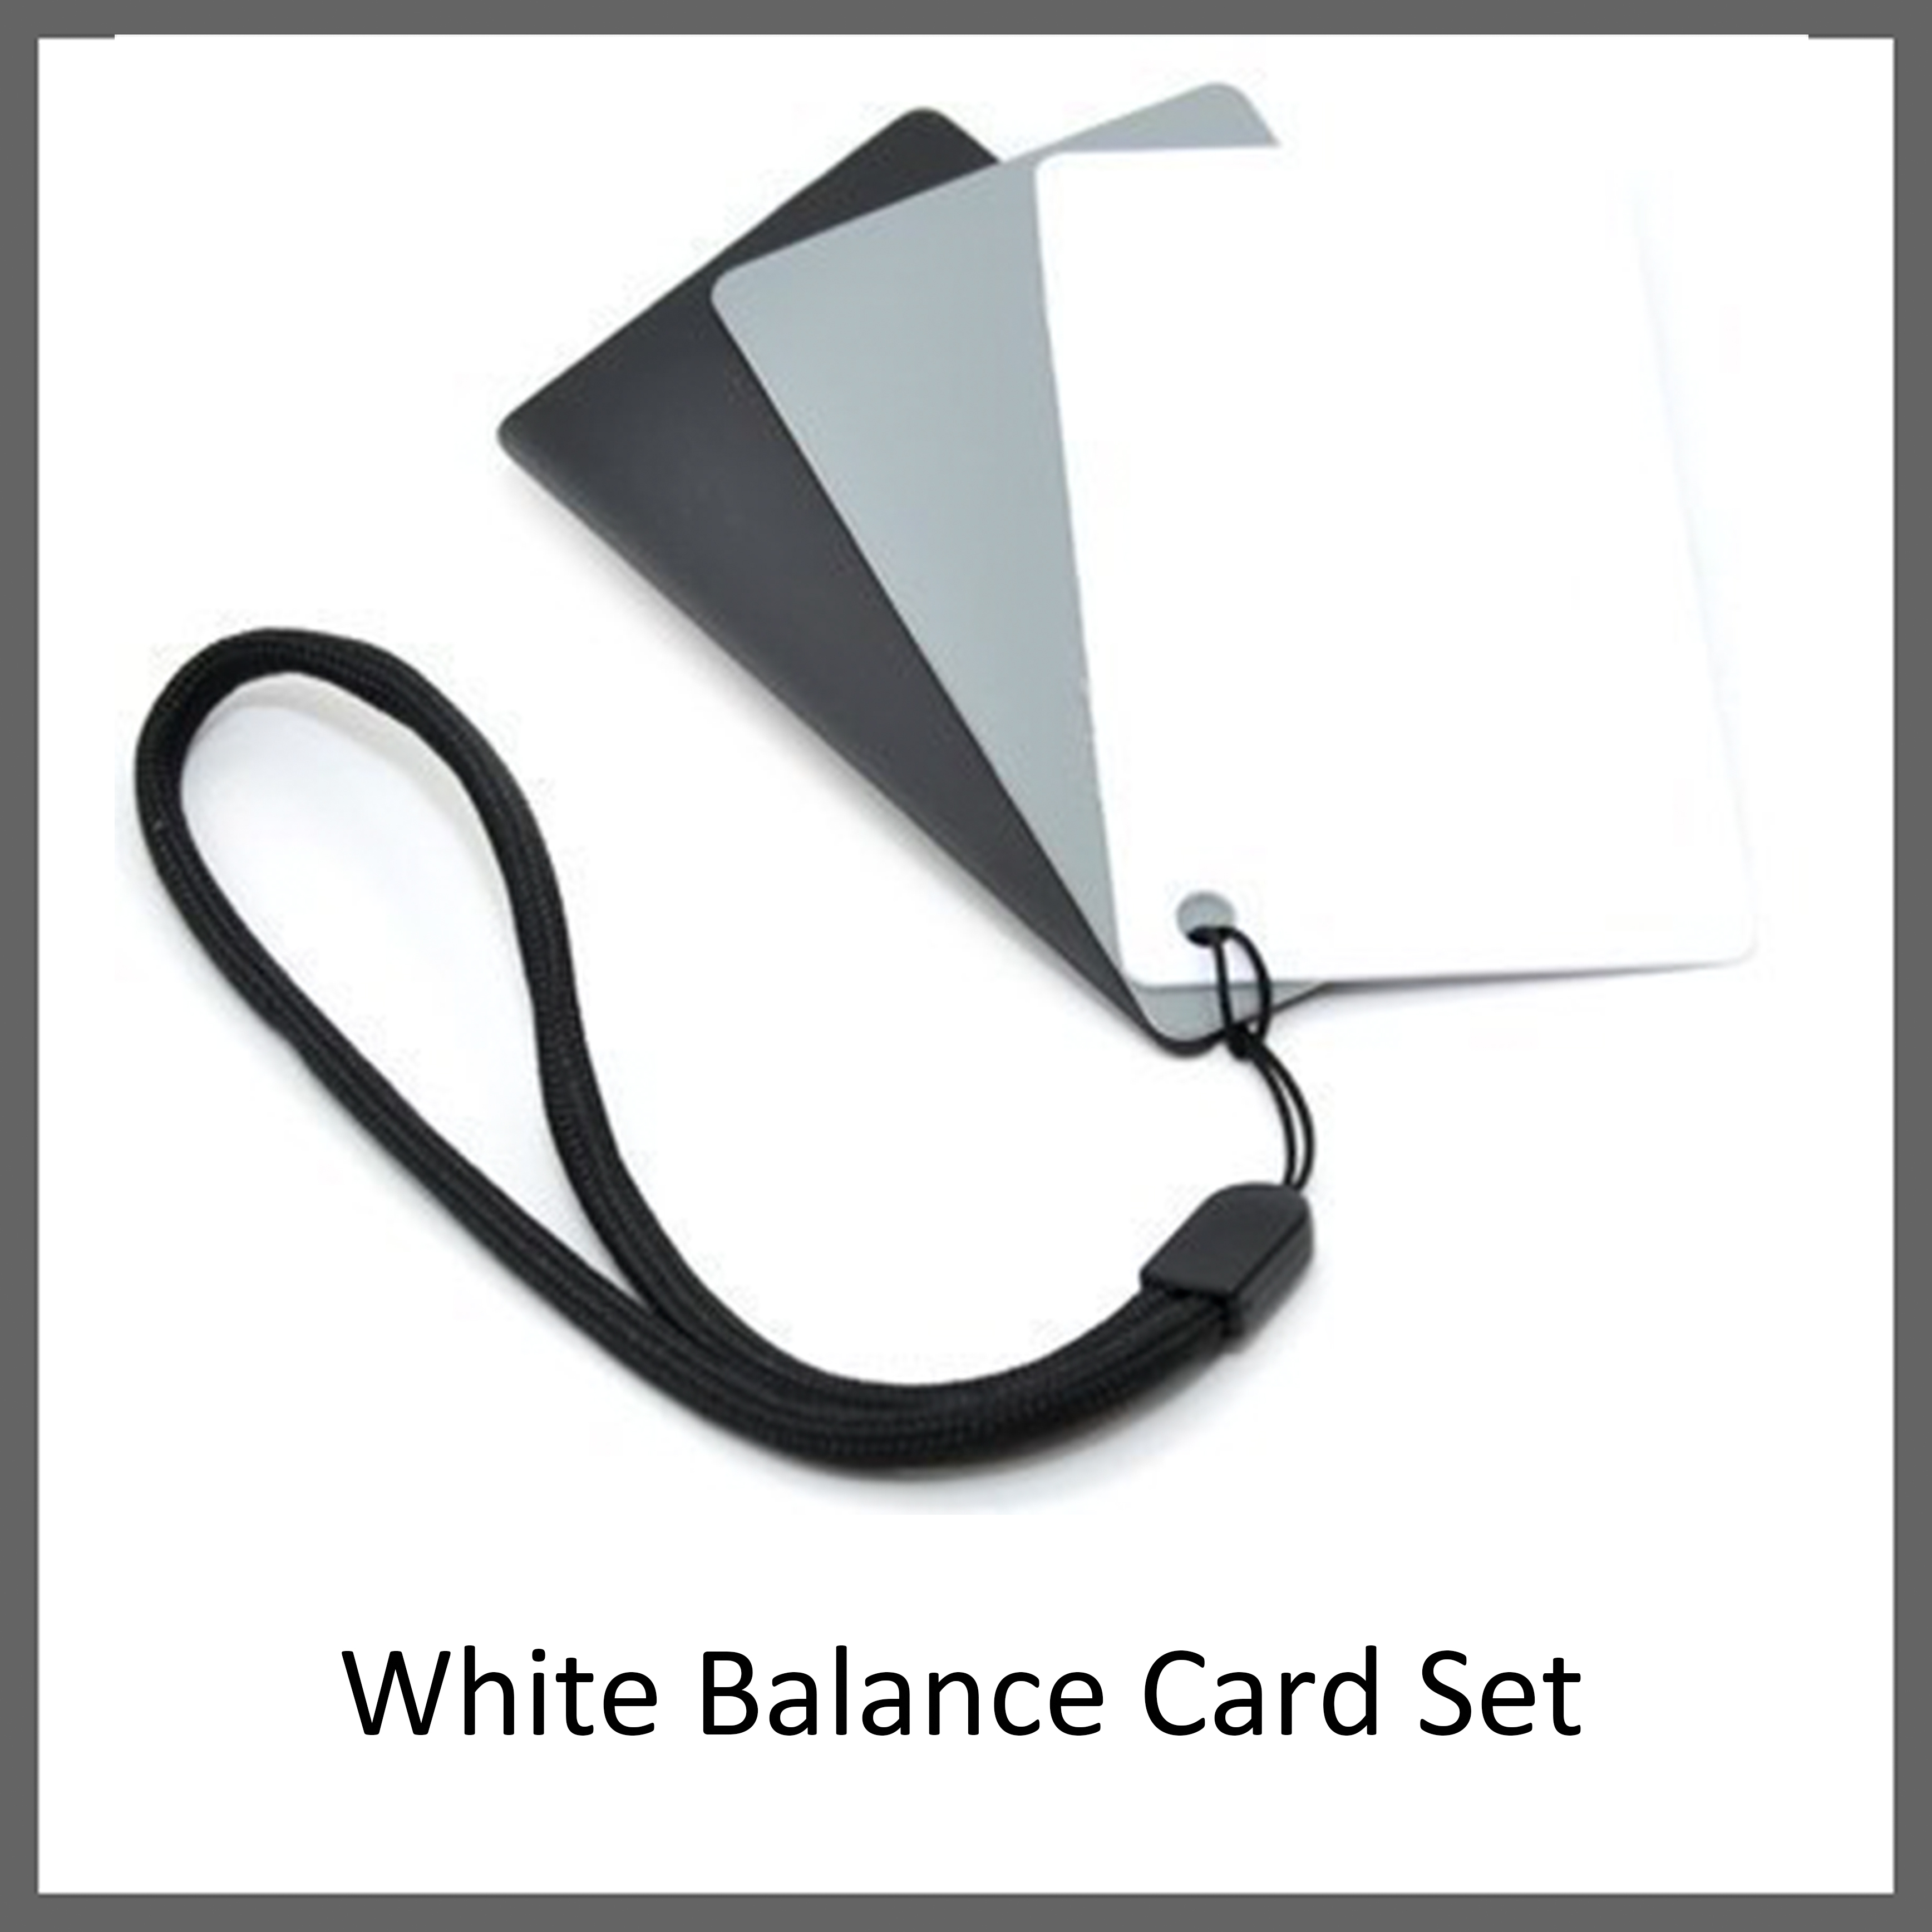 White Balance Card Set